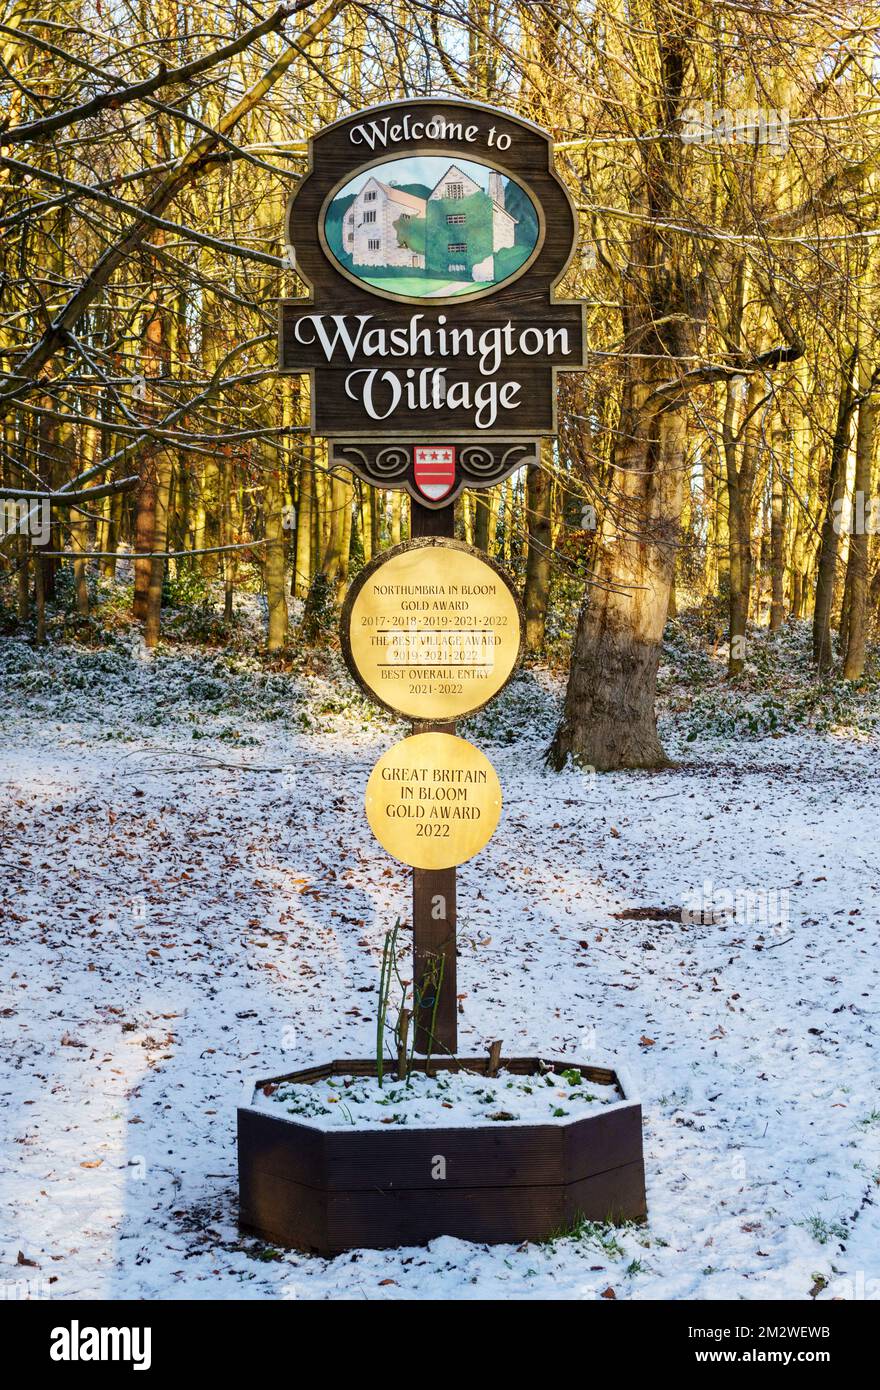 Winter view of Washington Village sign, north east England, UK Stock Photo